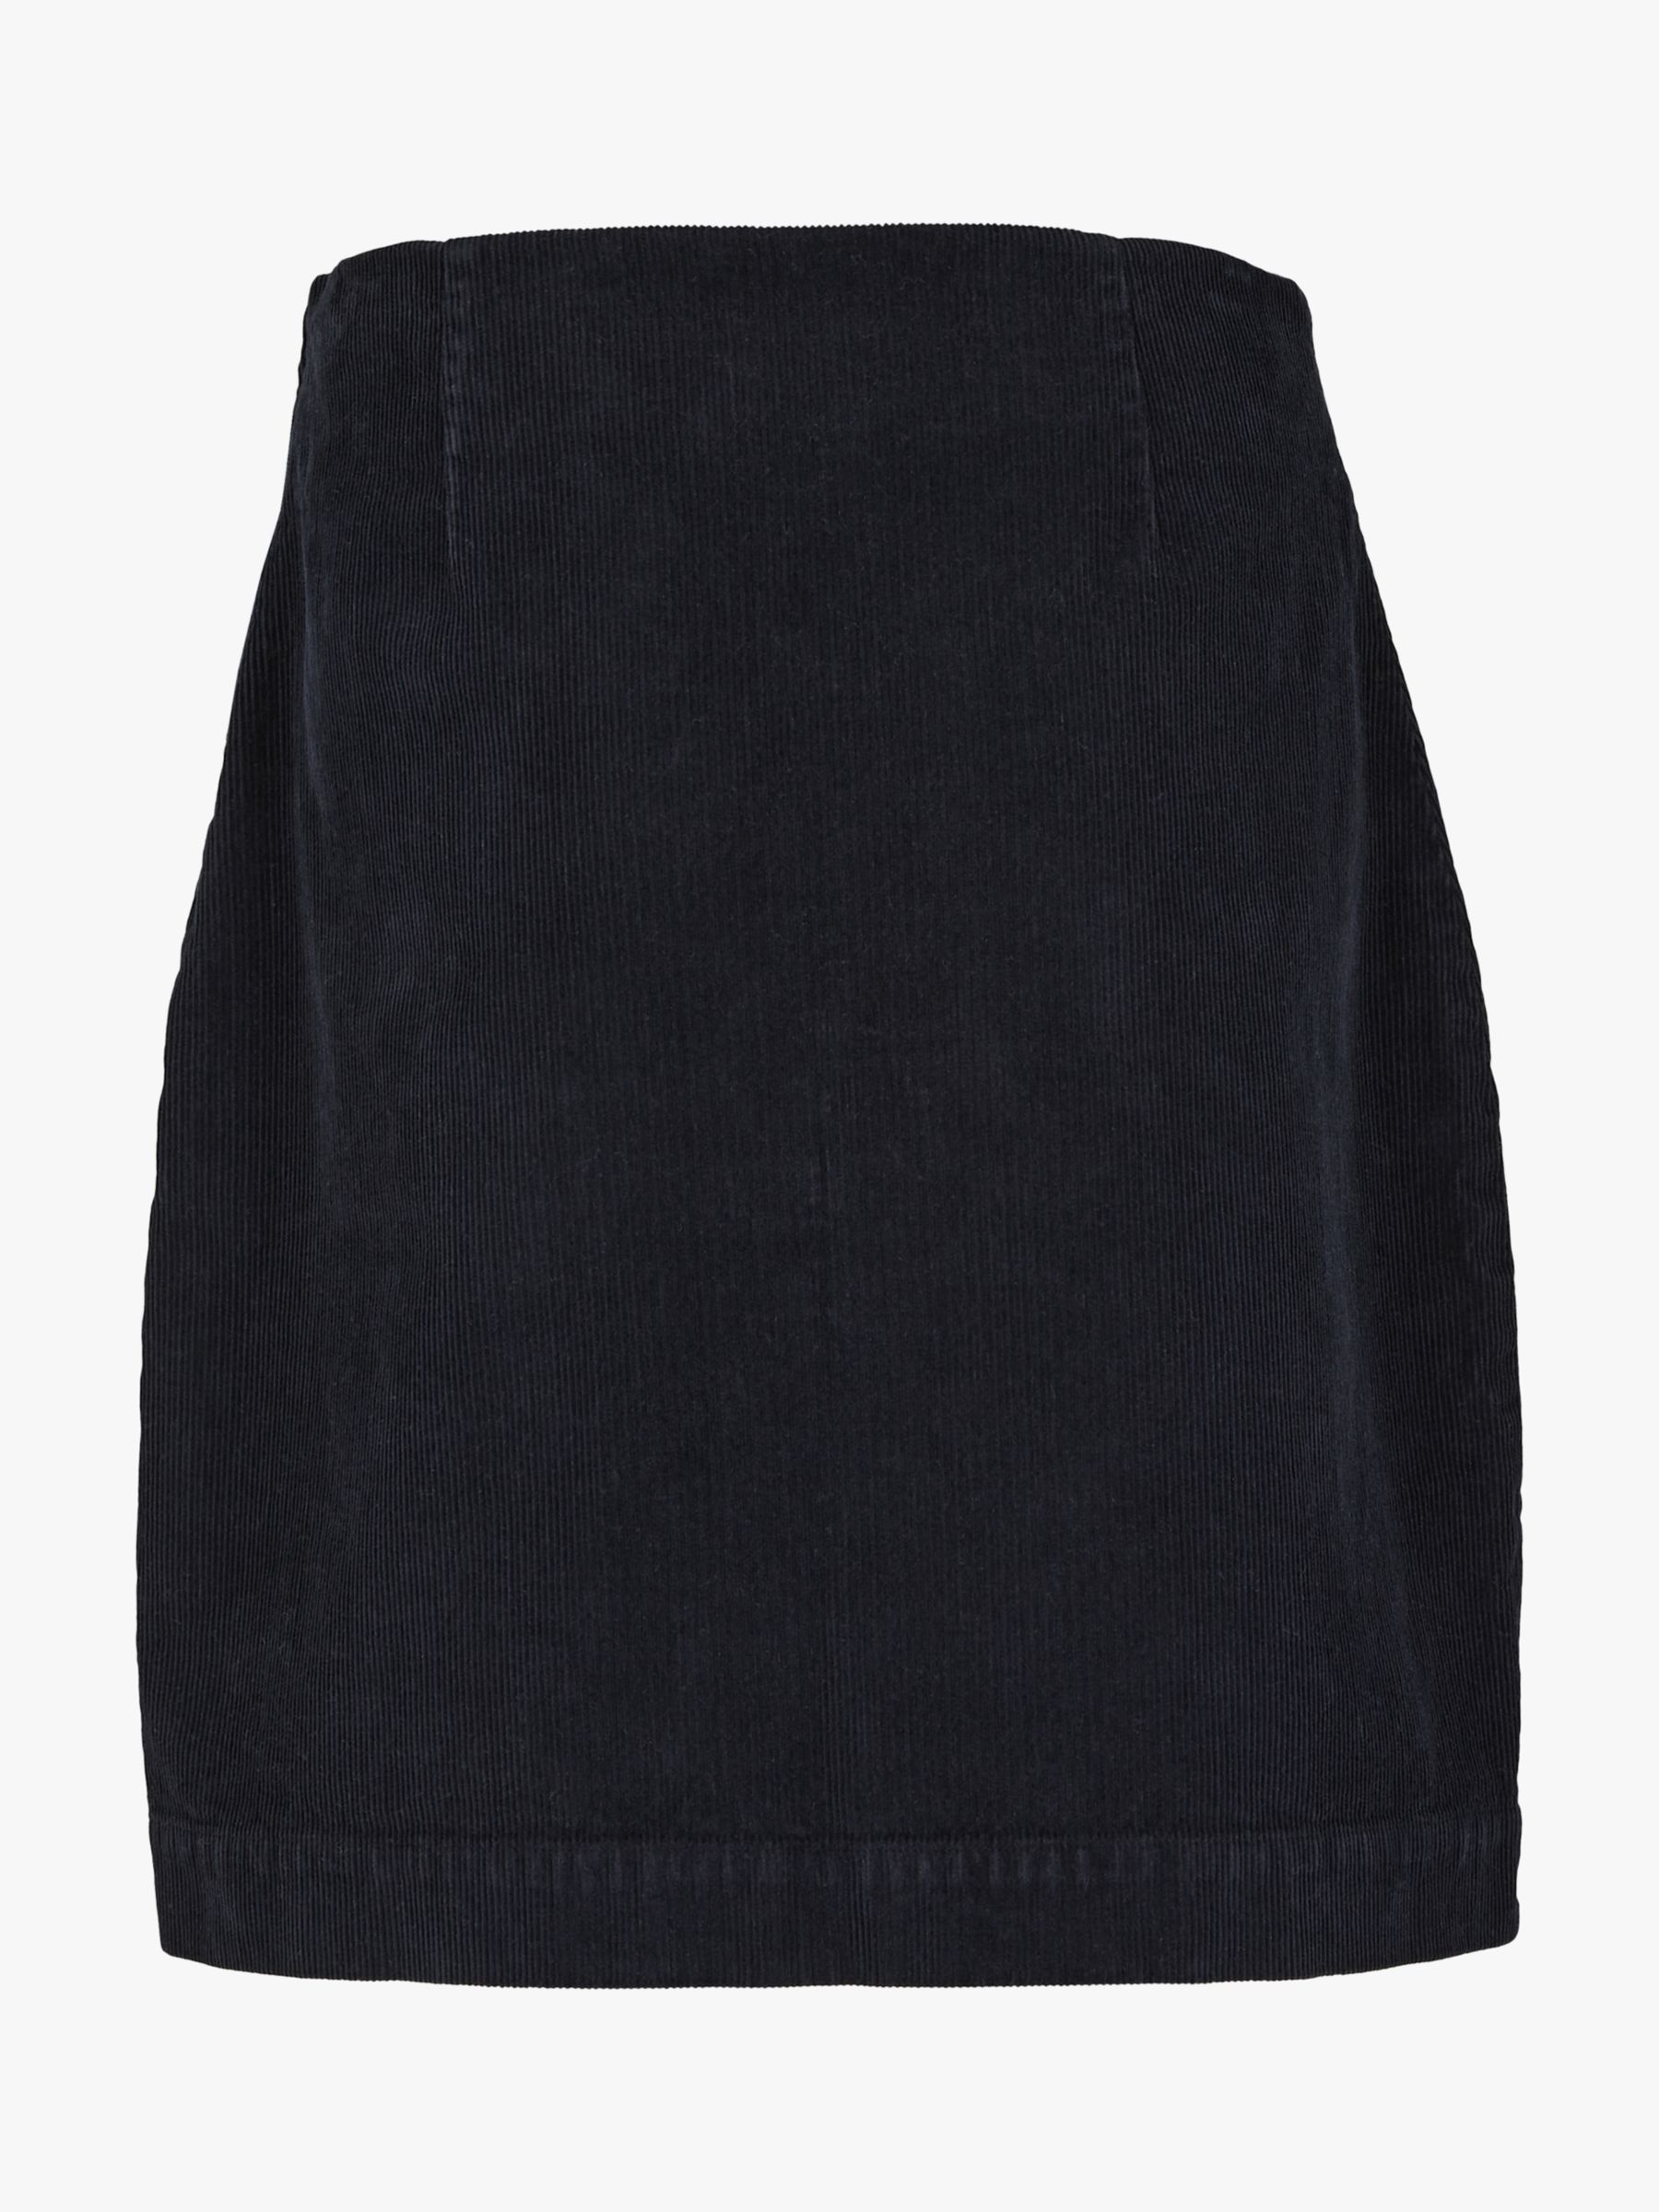 Celtic & Co. Cotton Corduroy Knee Length Skirt, Dark Navy at John Lewis ...